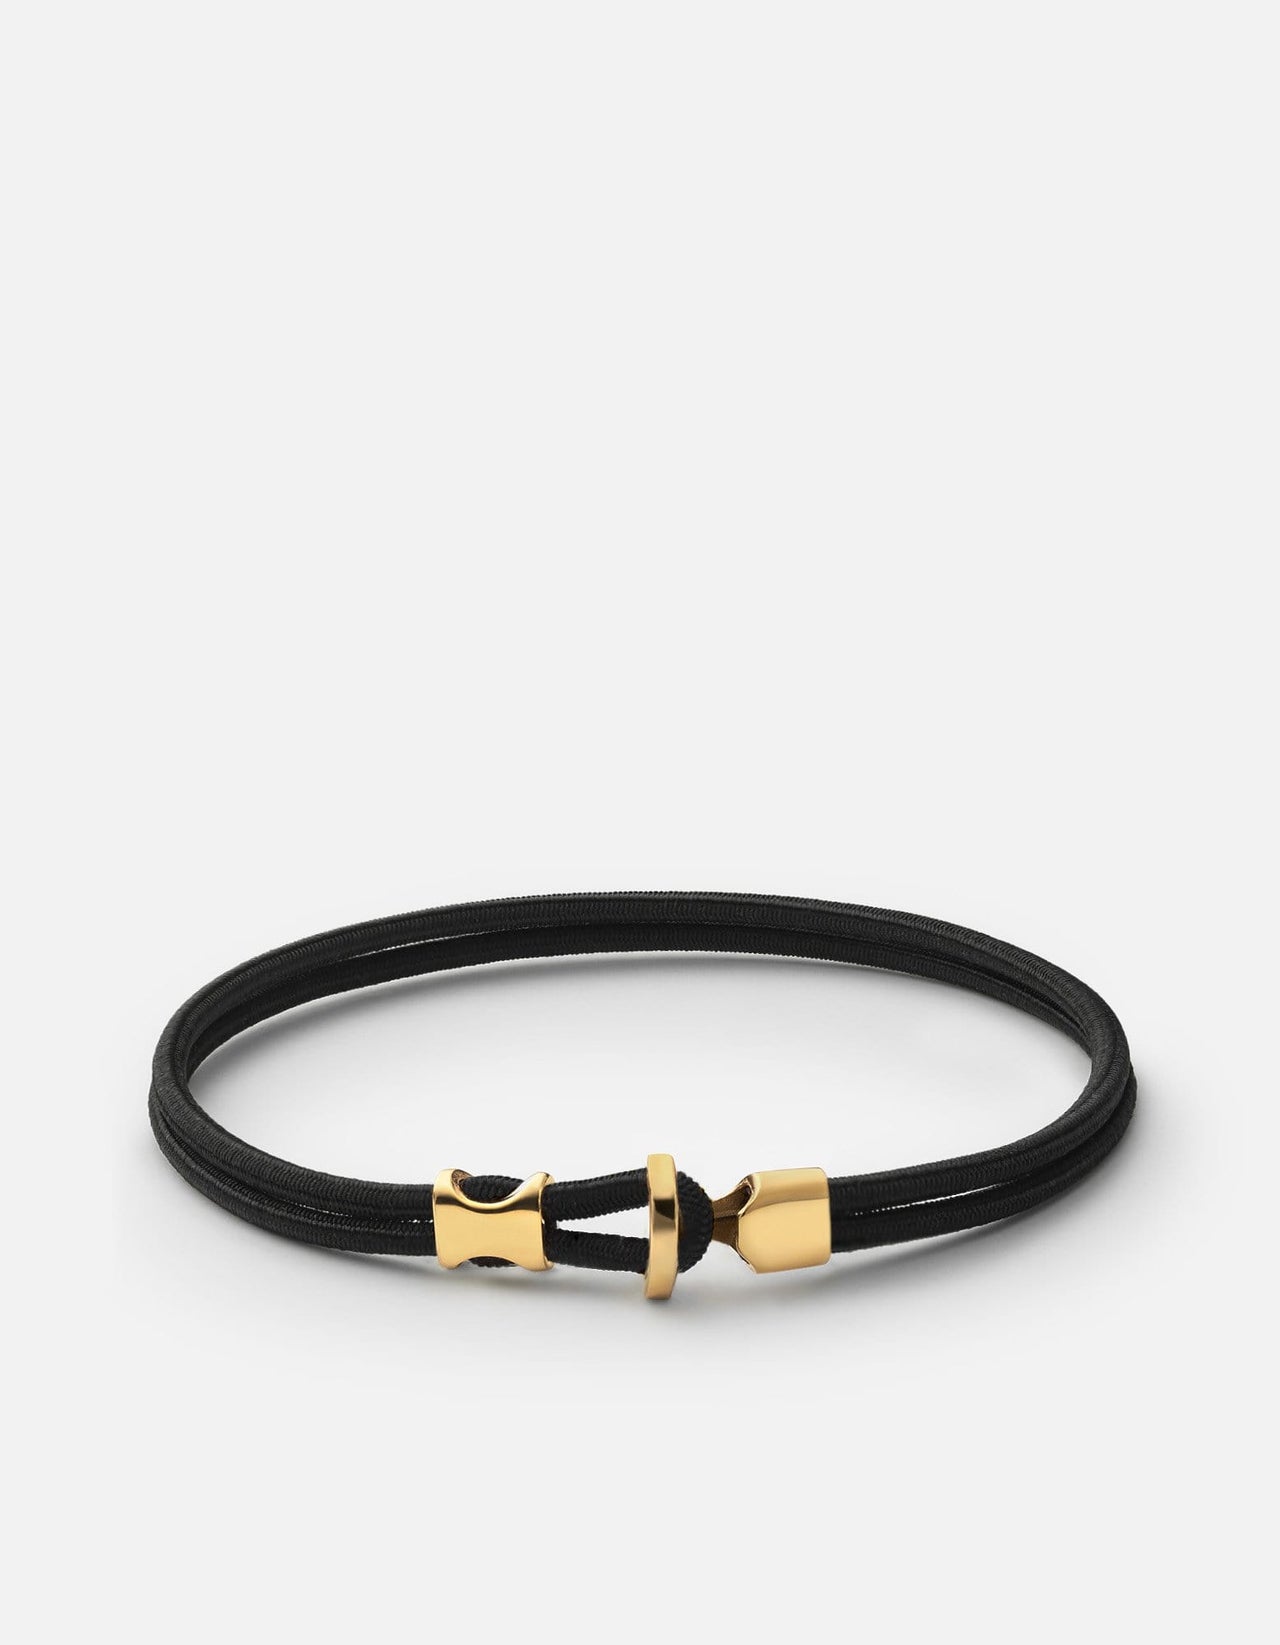 Miansai Women's Orson Loop Bungee Rope Bracelet, Gold Vermeil, Size M